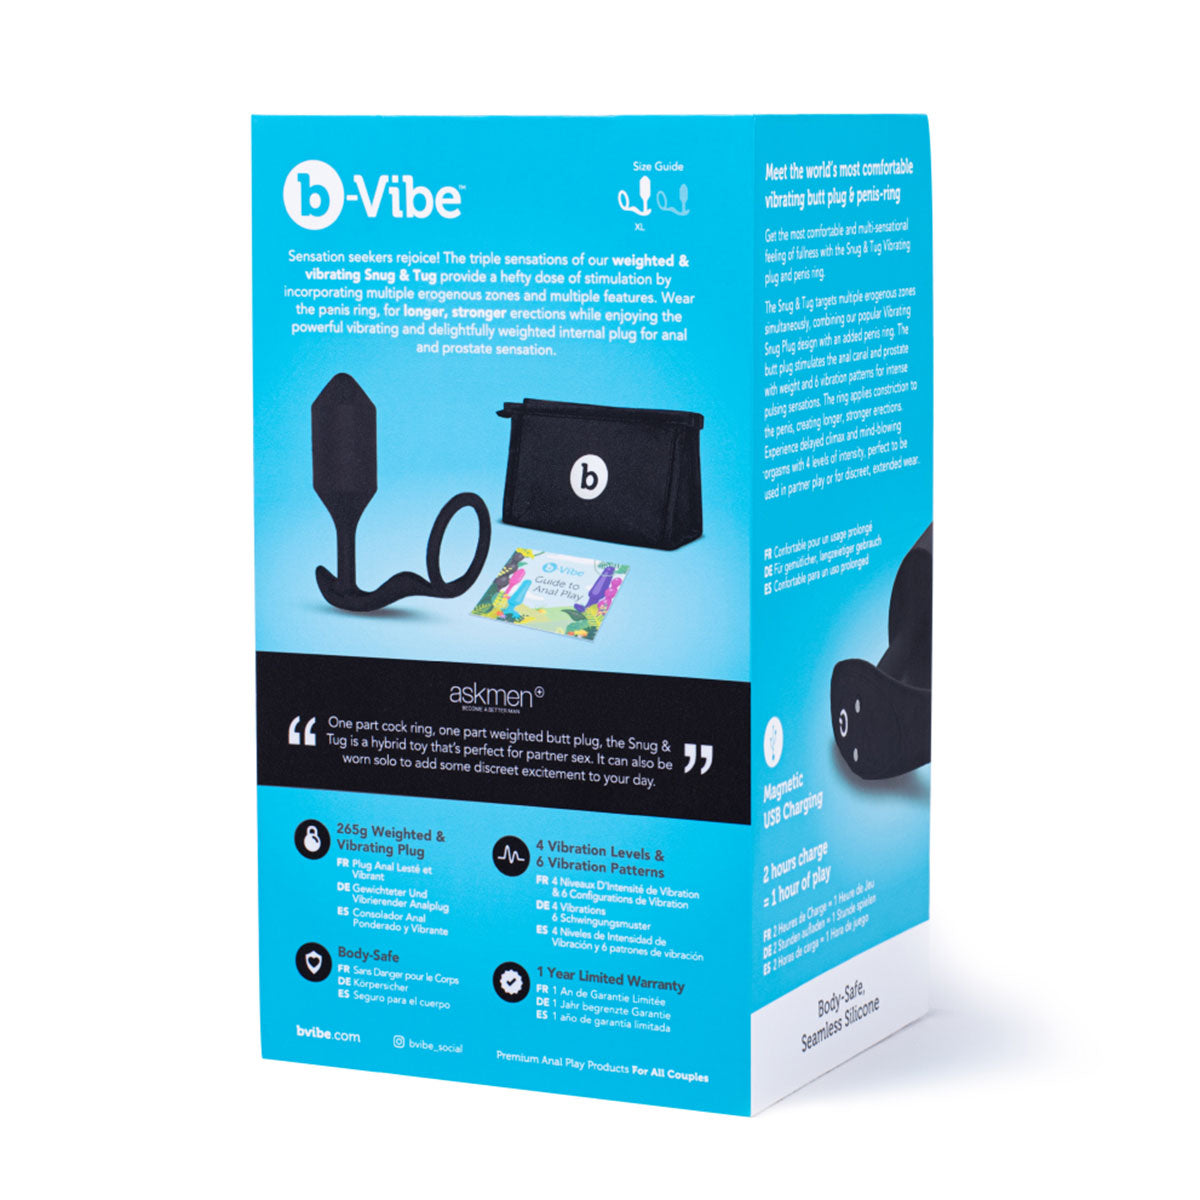 B-Vibe Vibrating Snug & Tug (XL) Intimates Adult Boutique